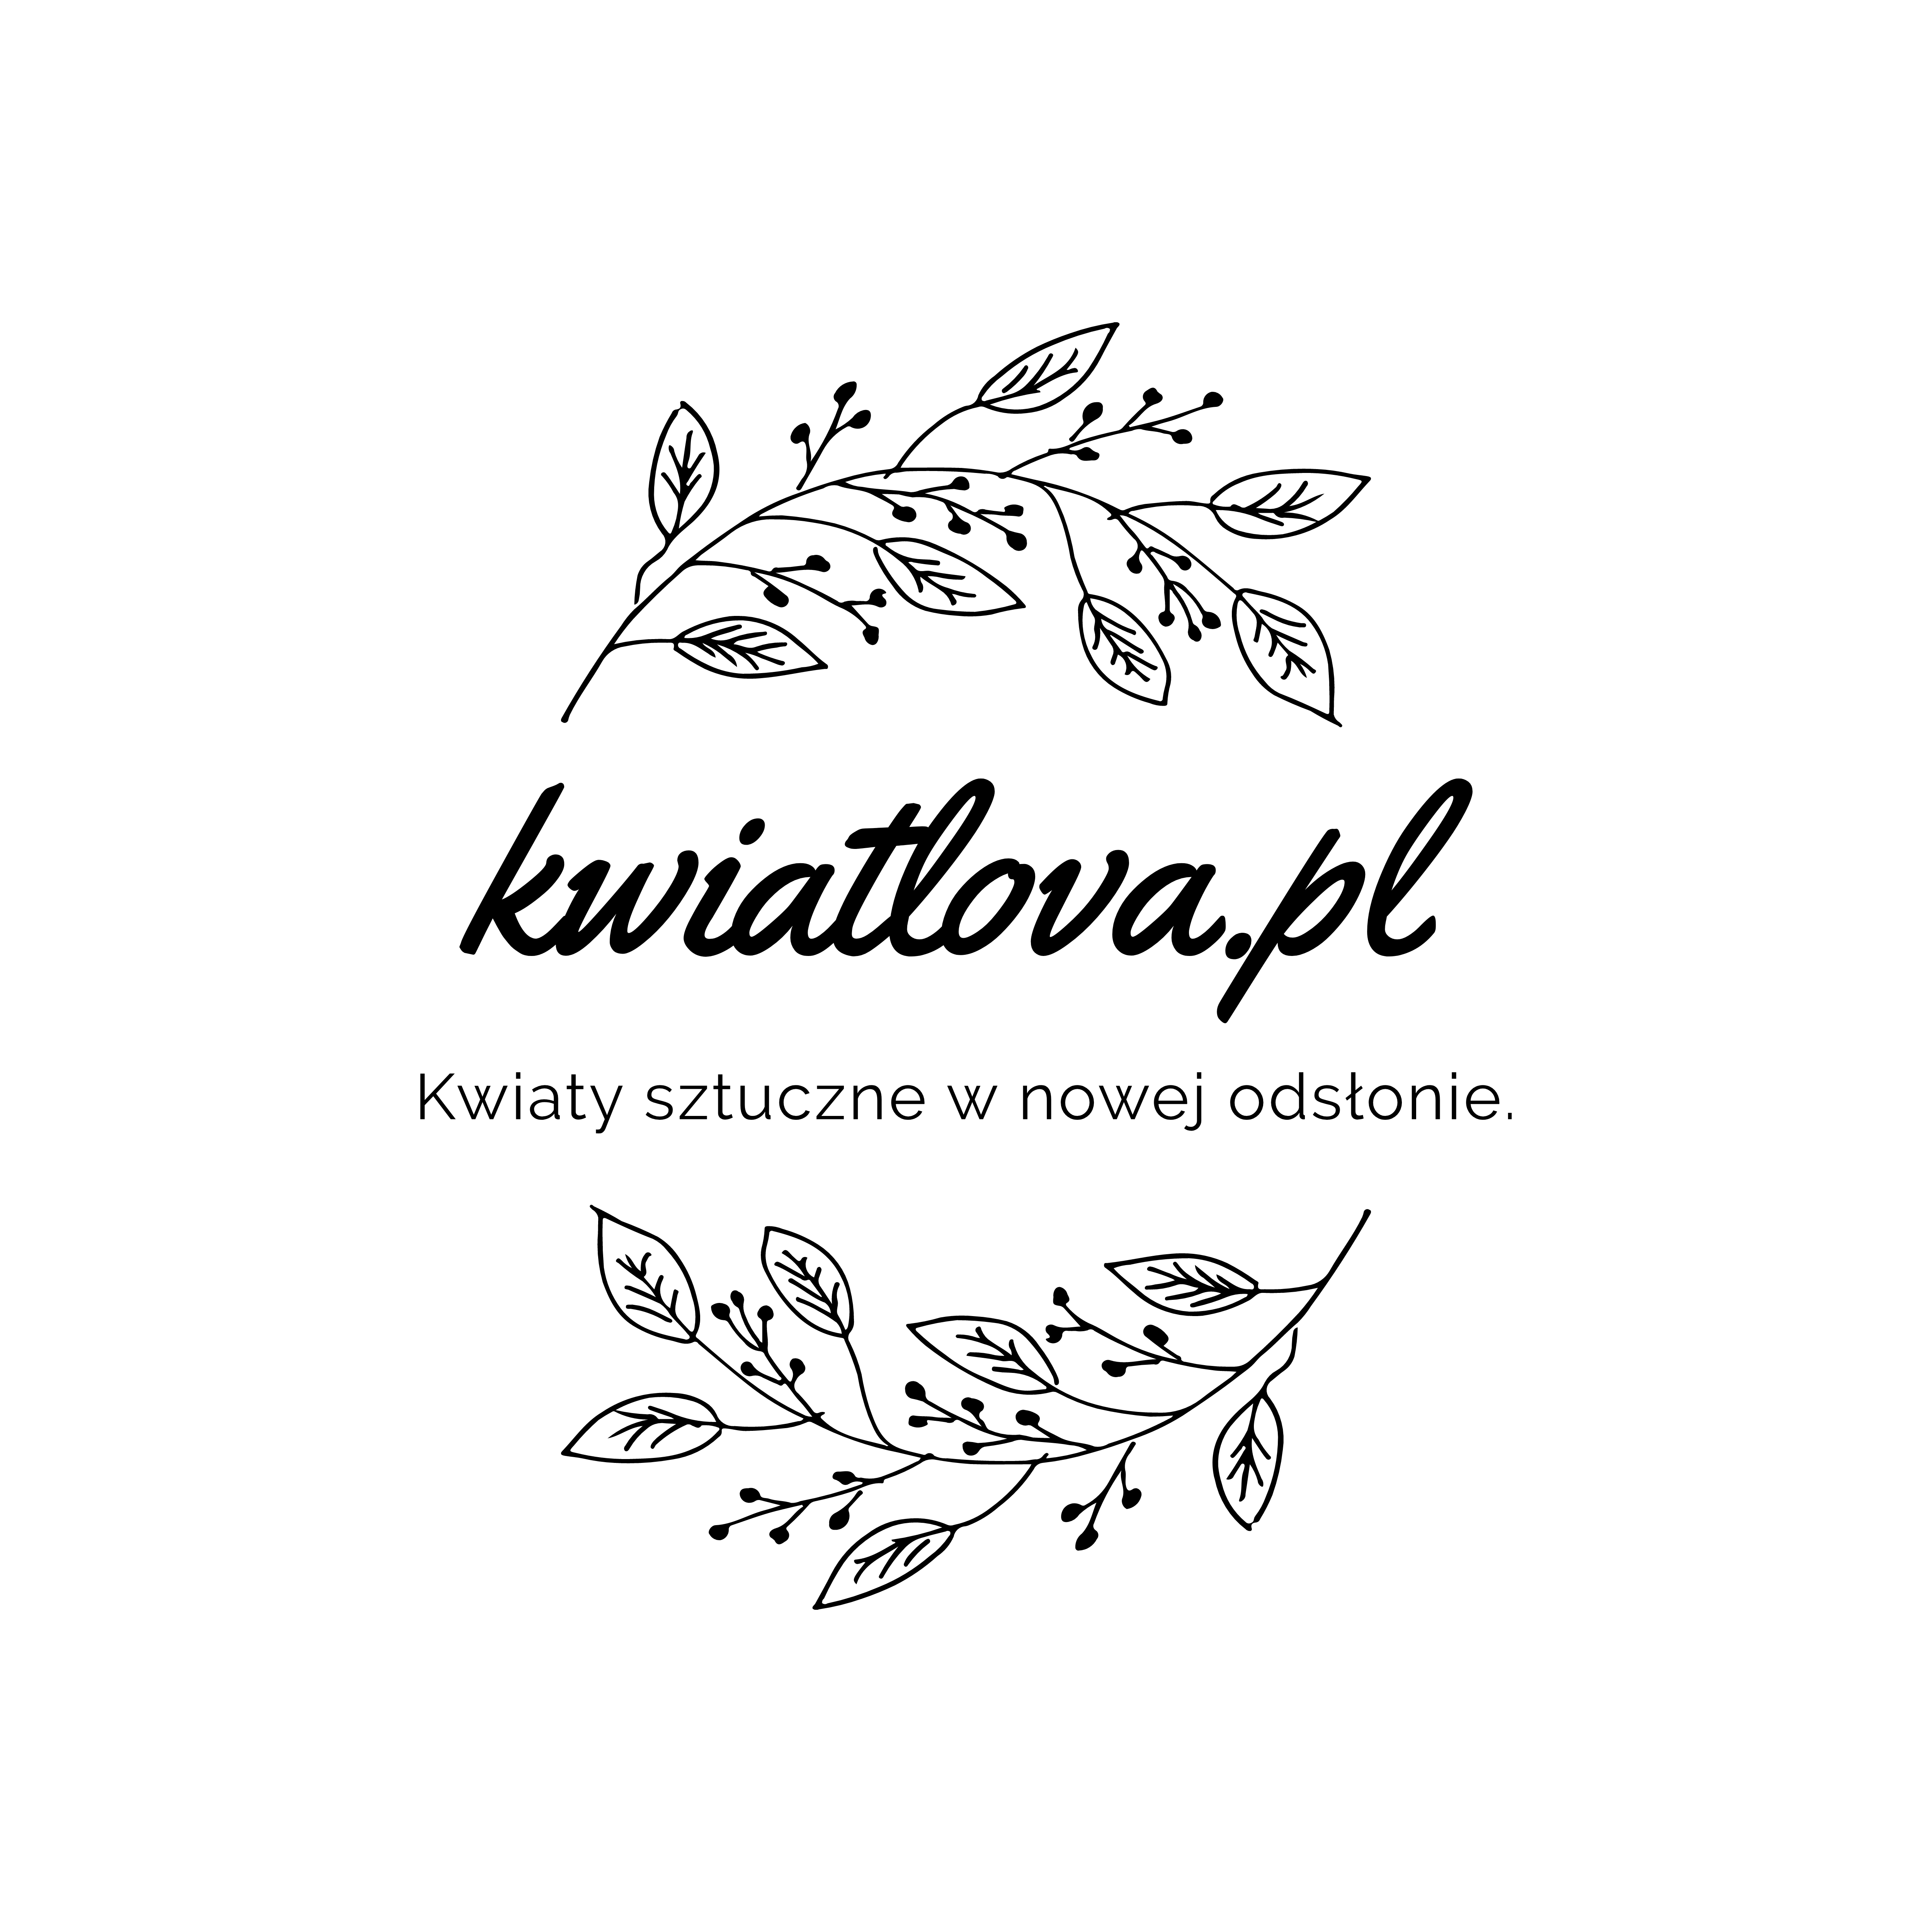 Kwiatlova.pl